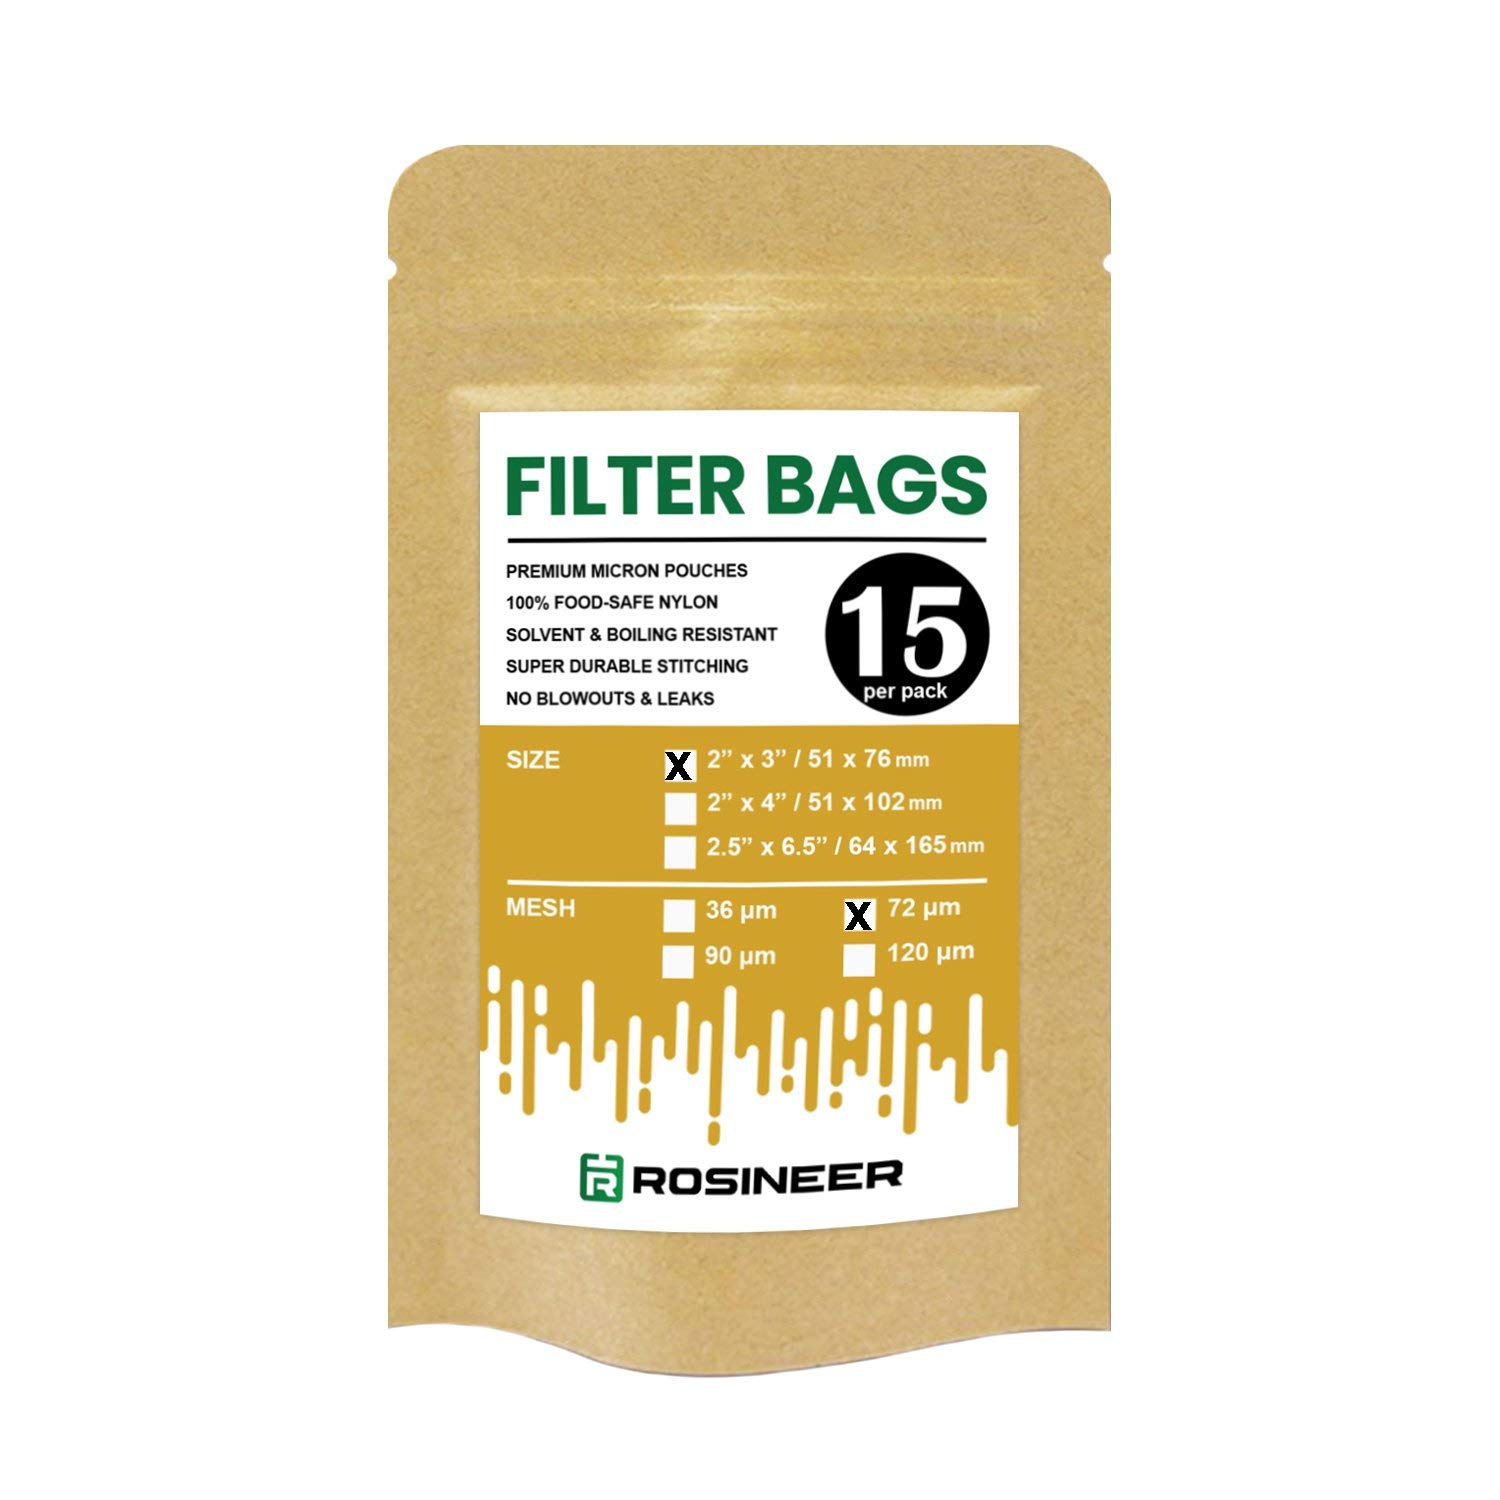 Rosineer Premium Nylon Filter Bags, 2 X 3, 15 Pcs, 72 Micron Mesh Size, Double Stitching, Zero Blowouts